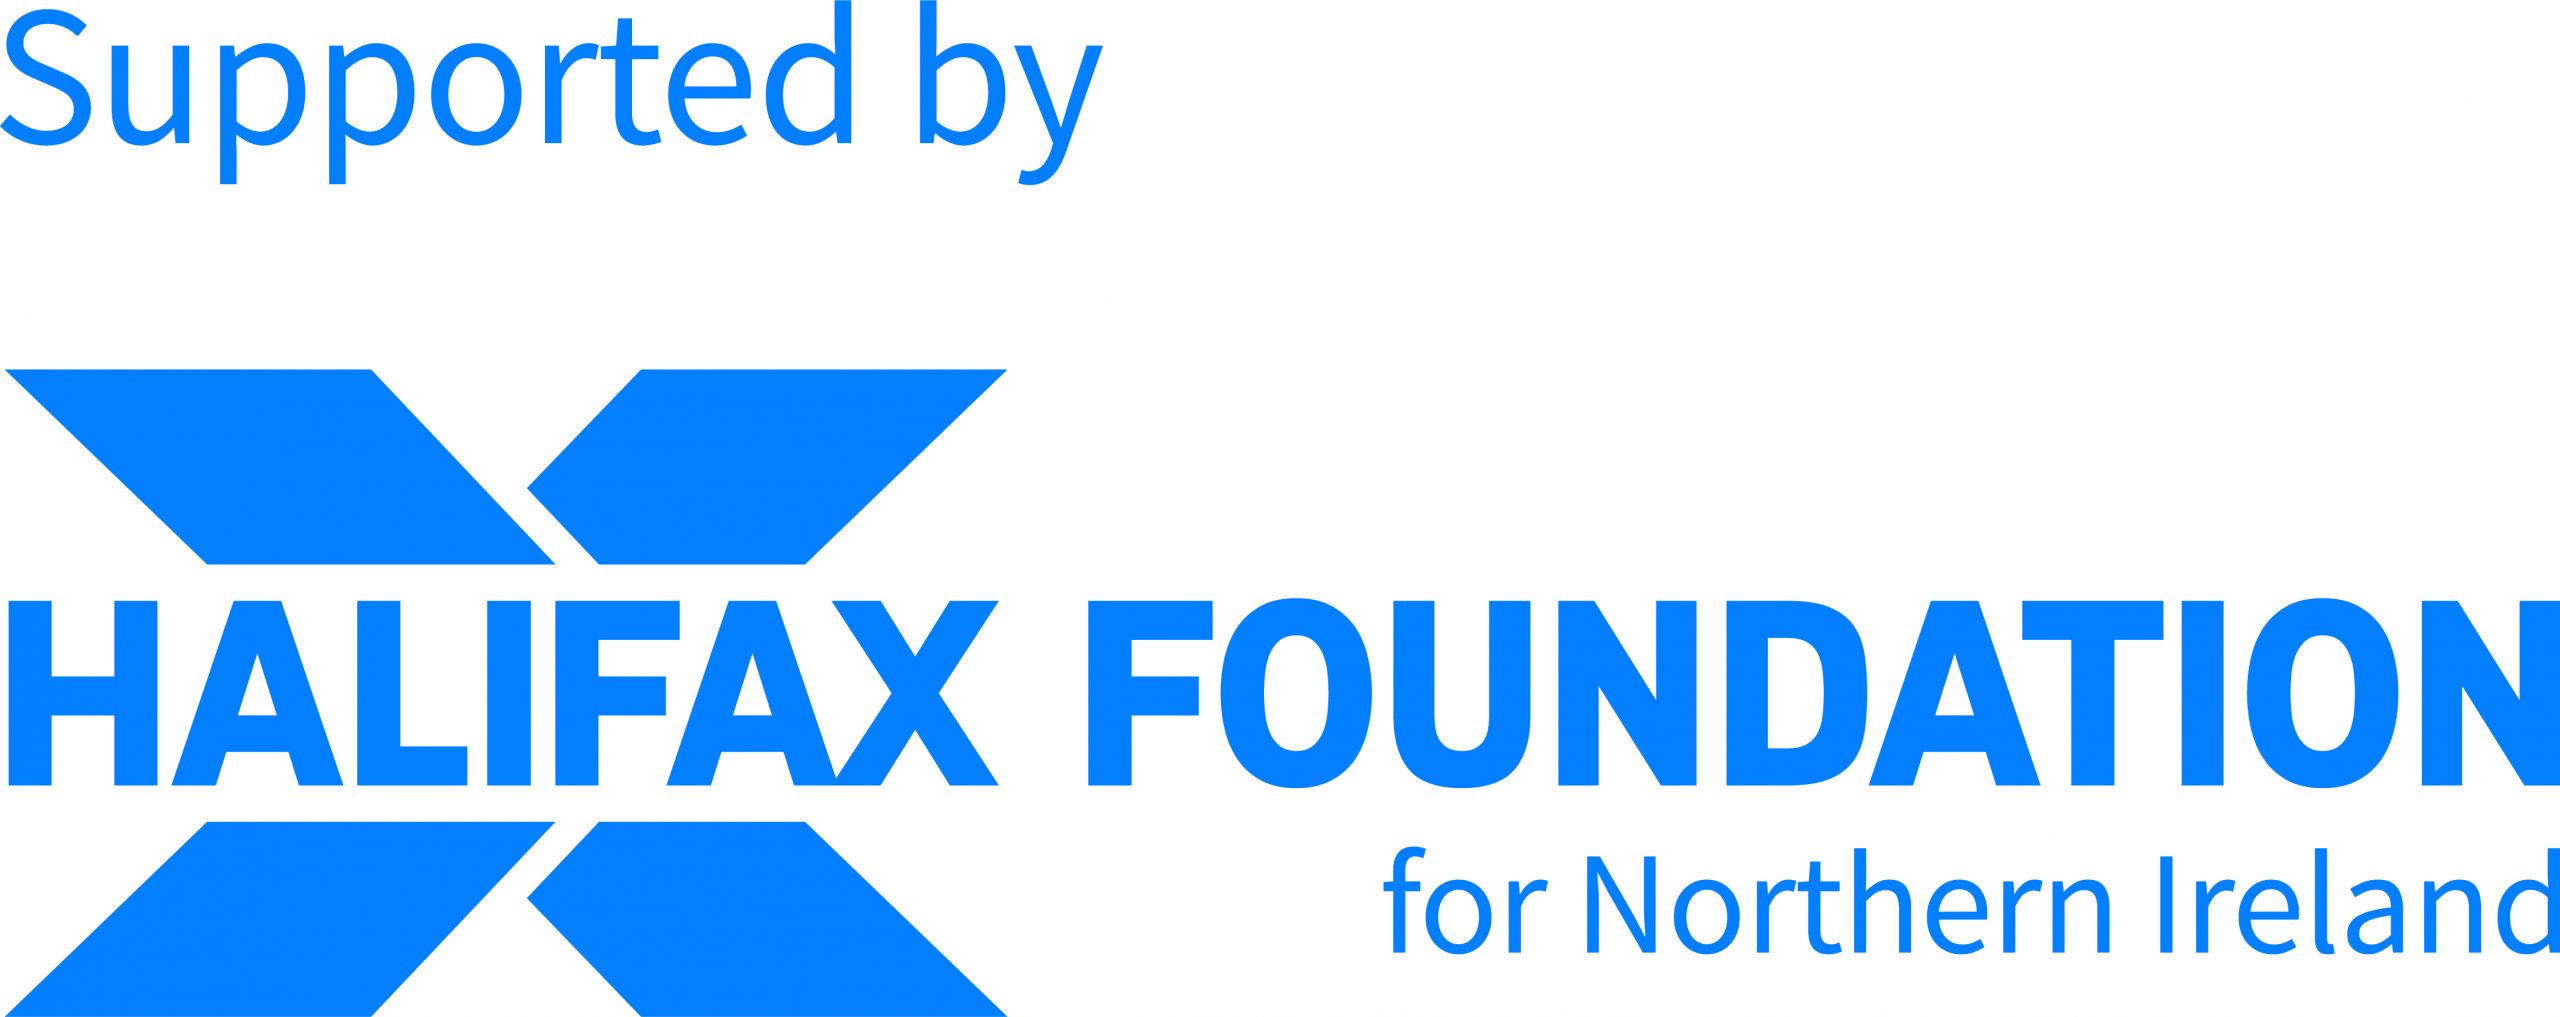 Halifax foundation for Northern Ireland logo